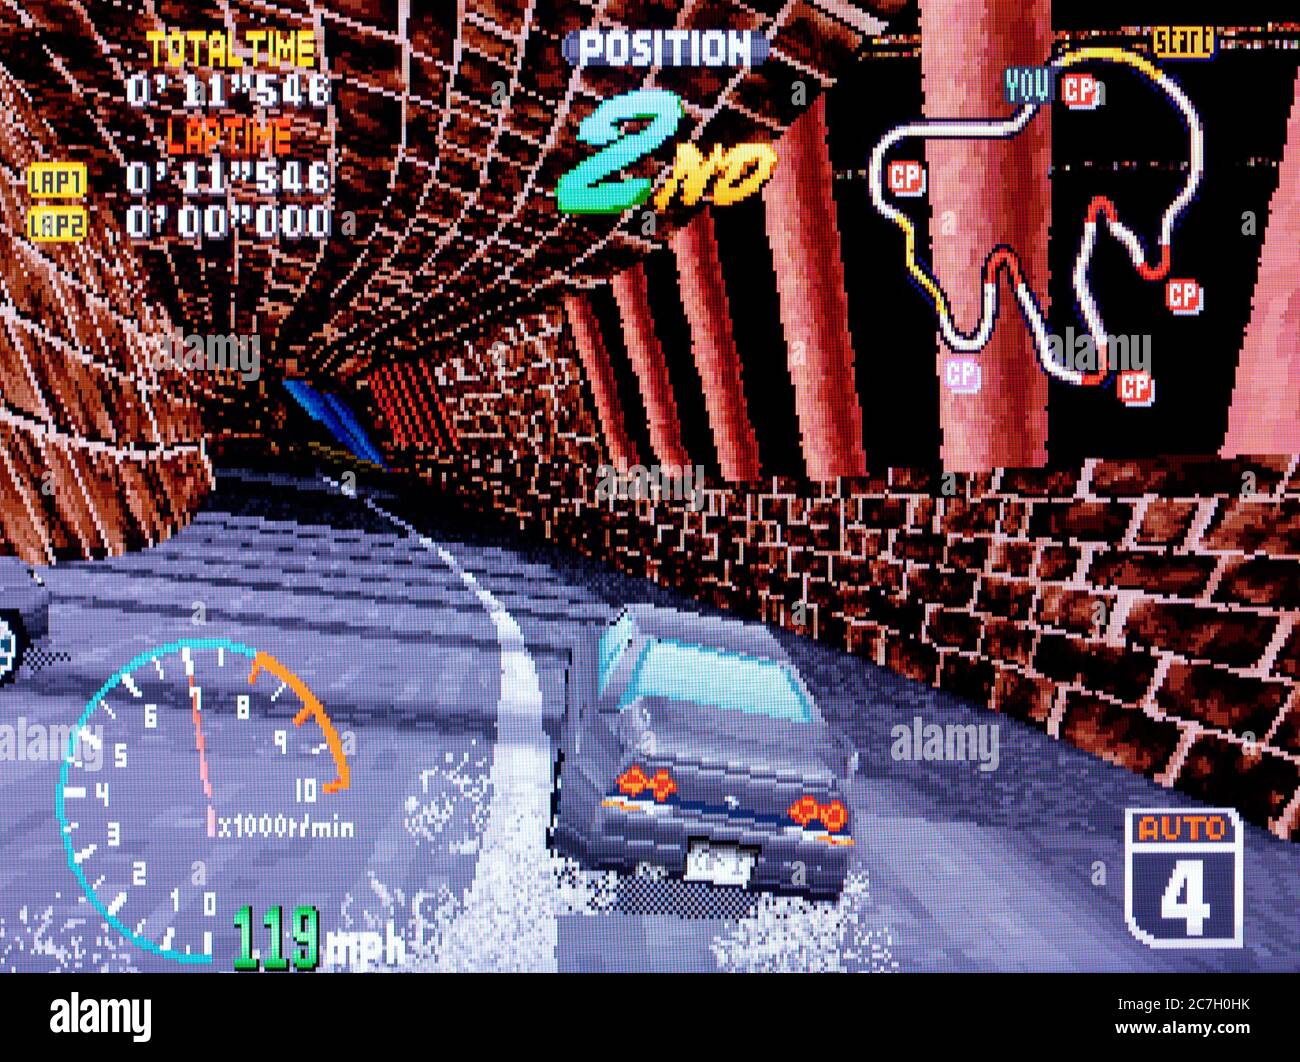 The Need for Speed - SEGA Saturn Gameplay [4K] 